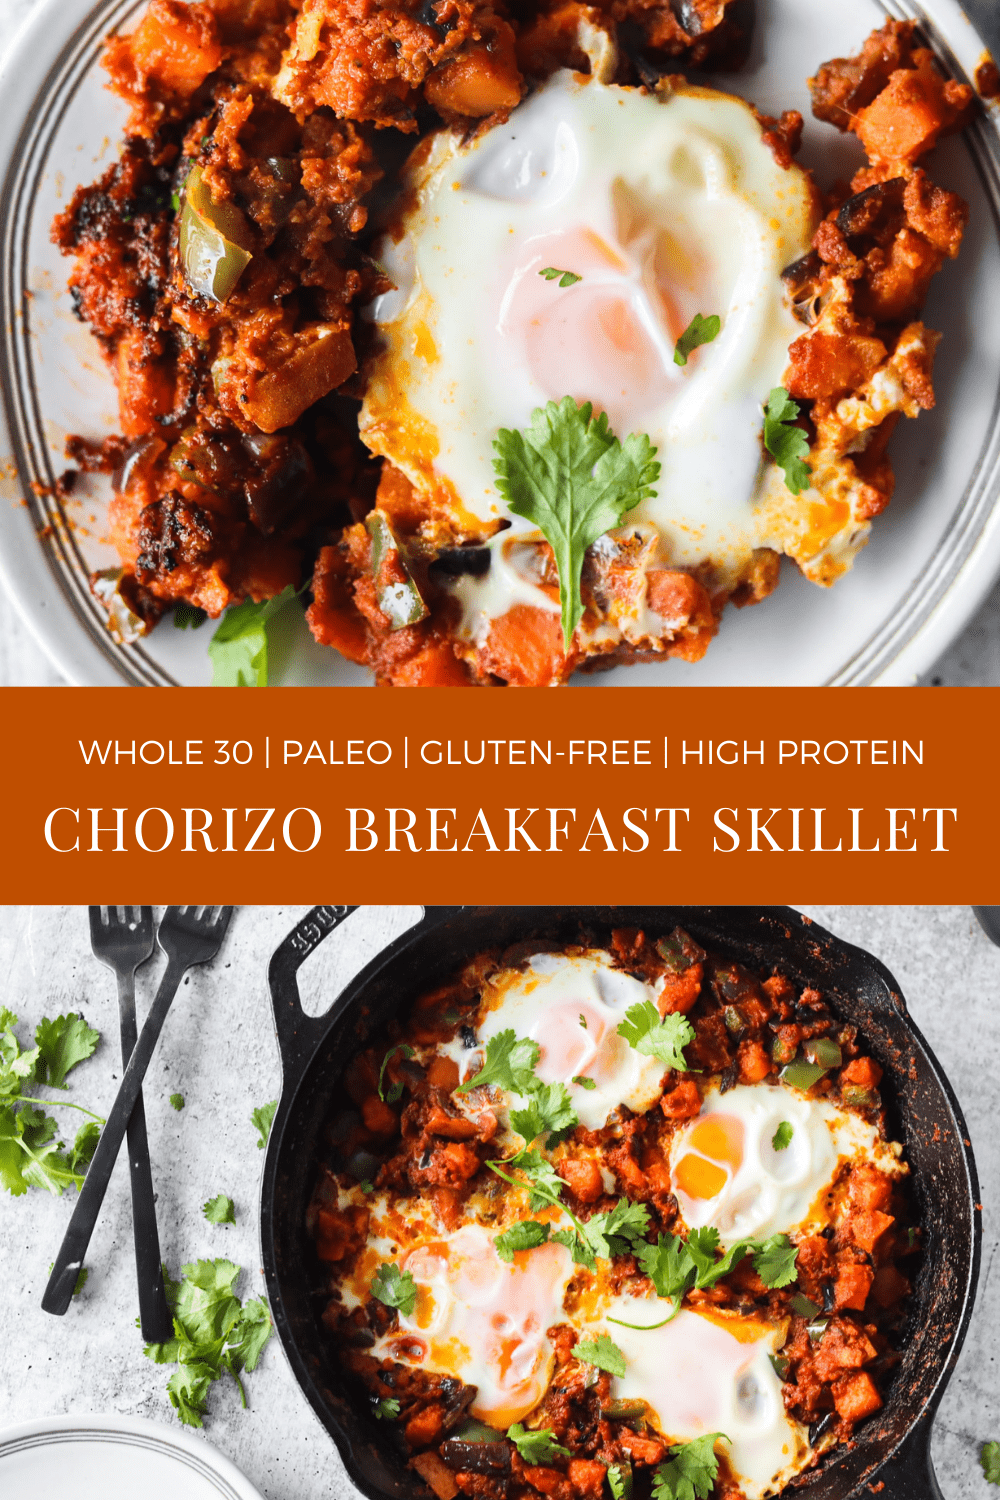 many people struggle with chorizo recipe ideas